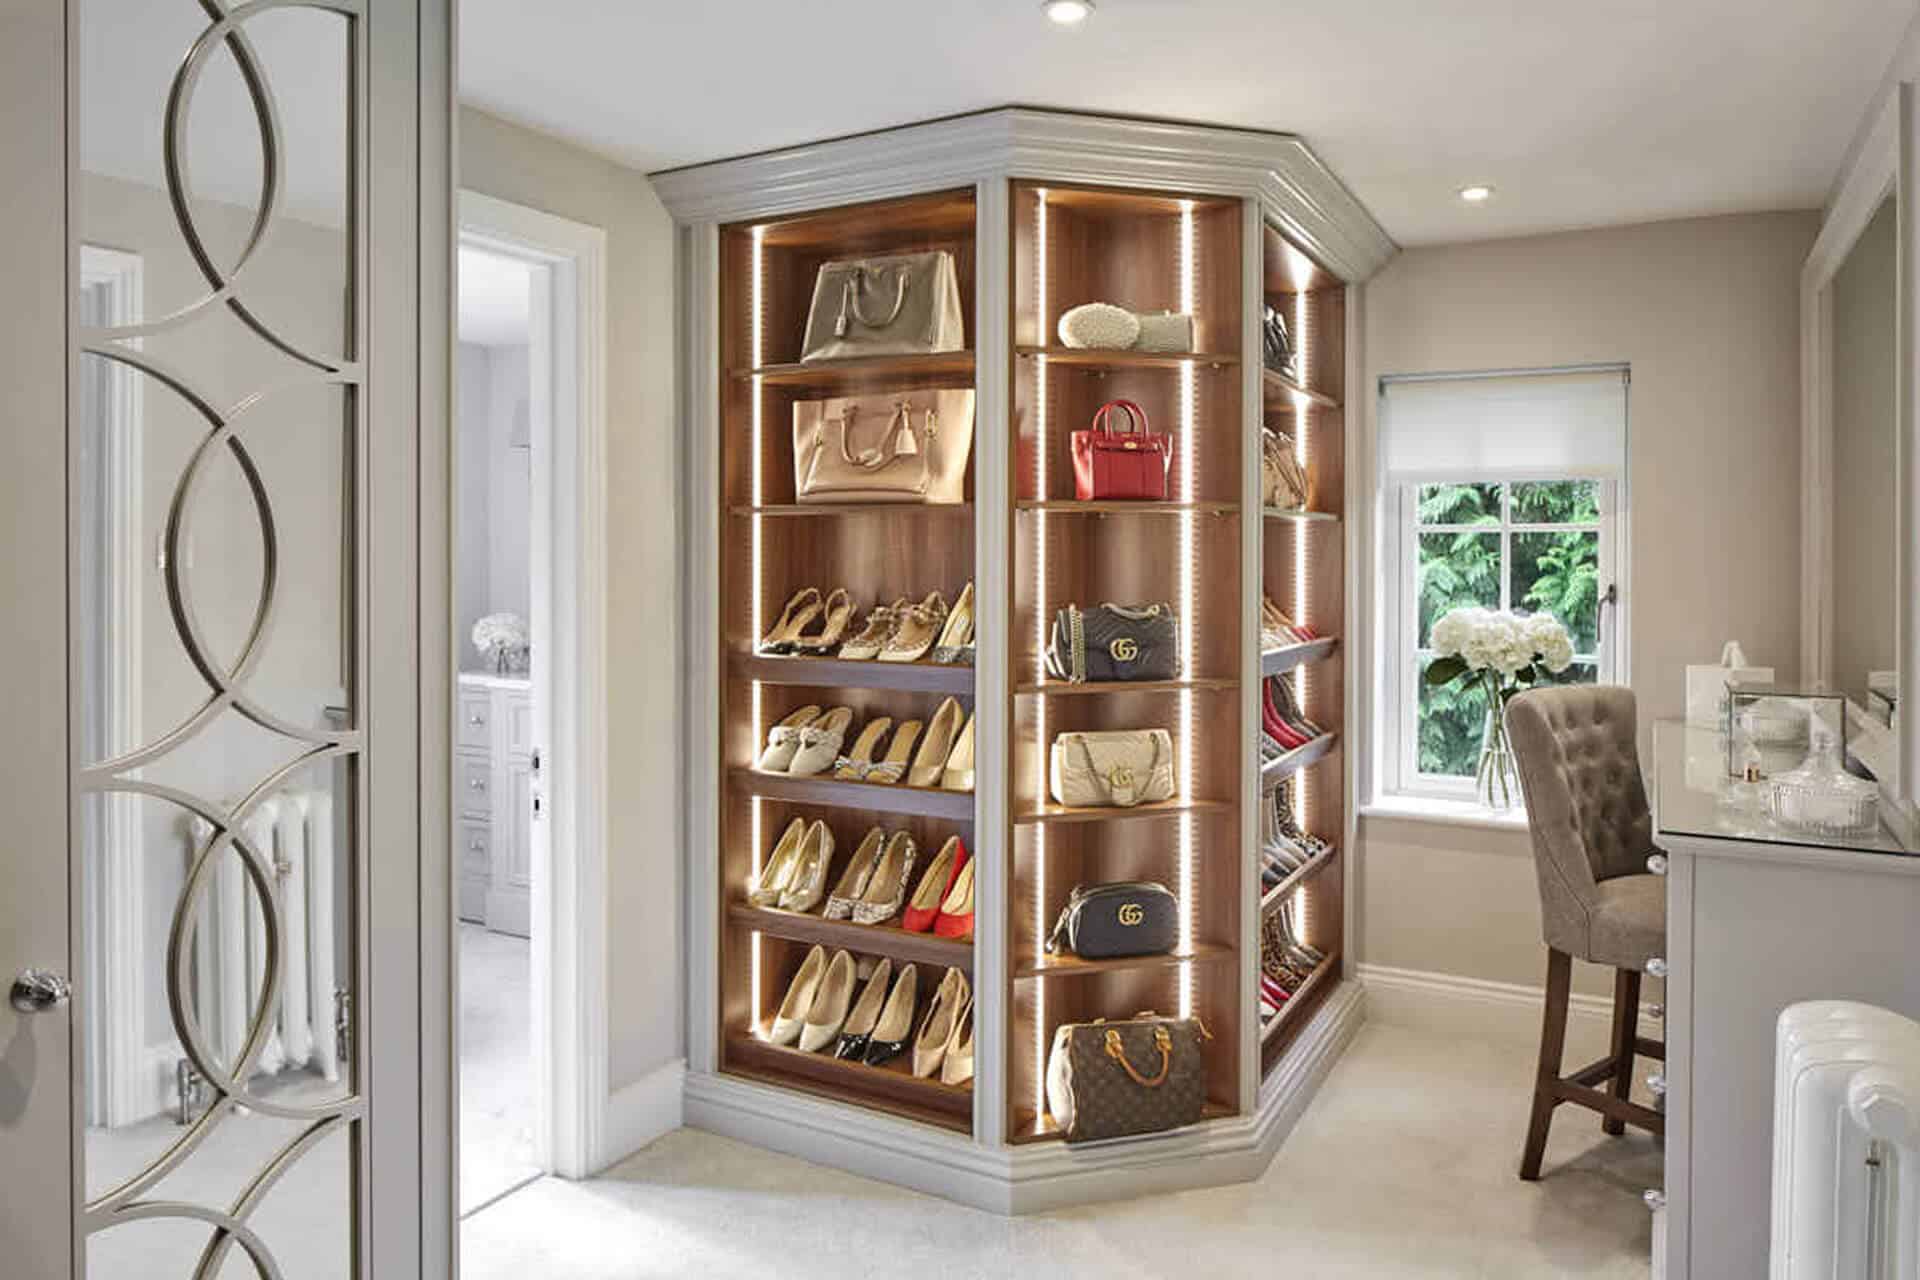 Walk-in closet with an elegant design